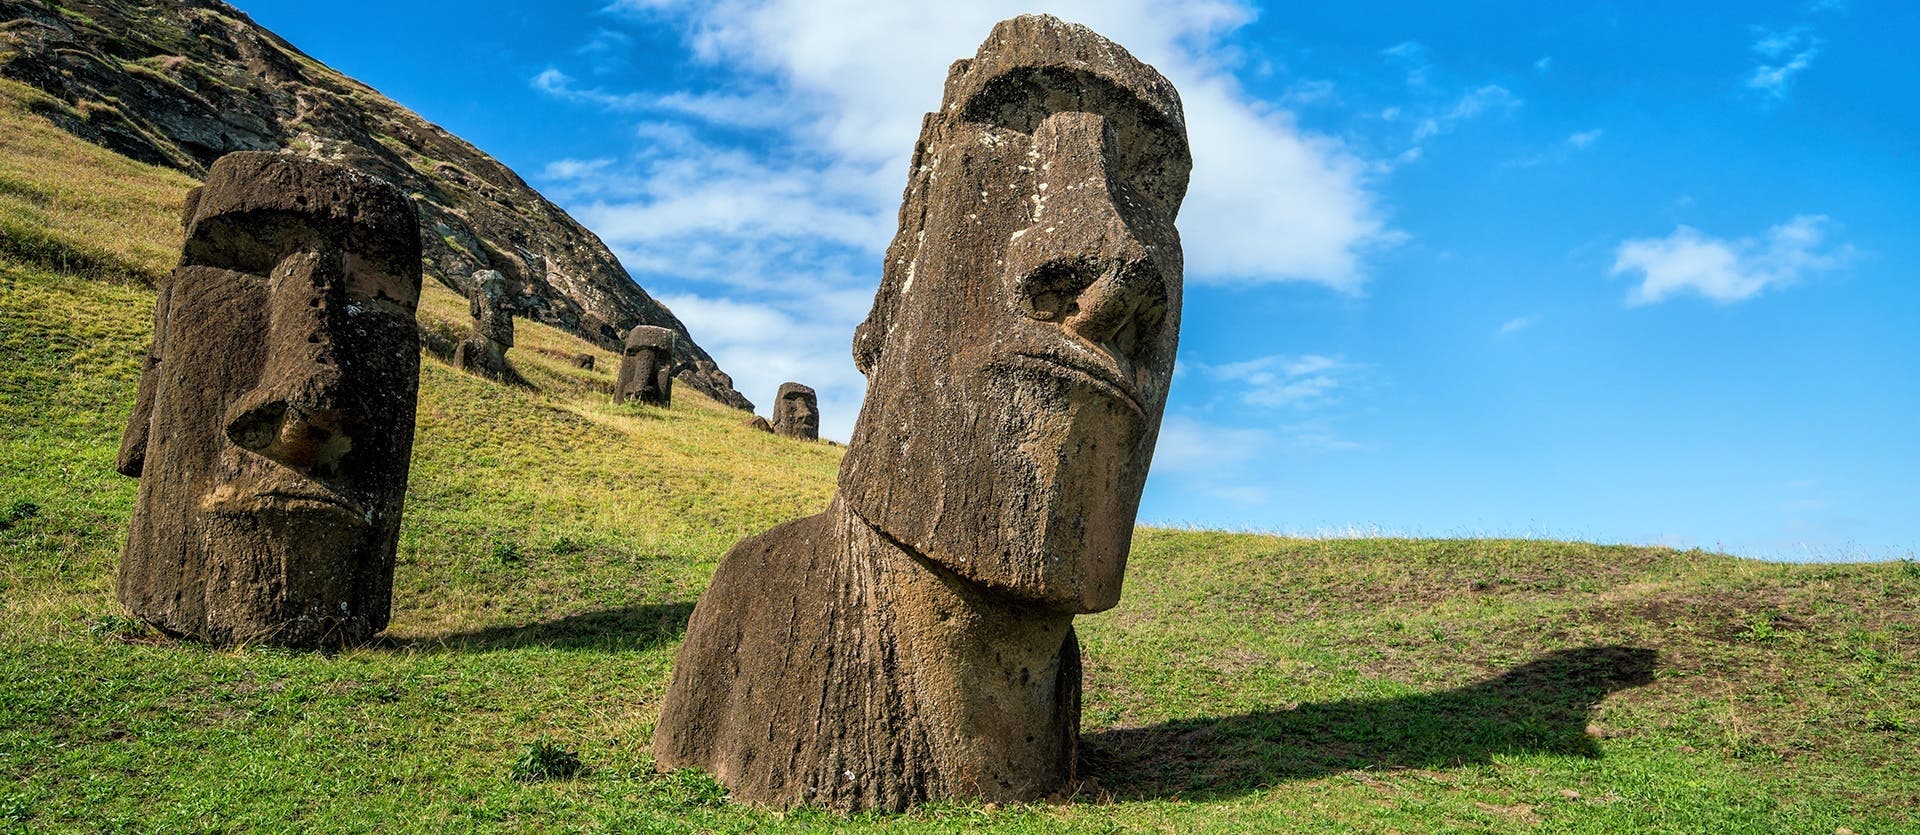 Santiago & Treasures of Easter Island